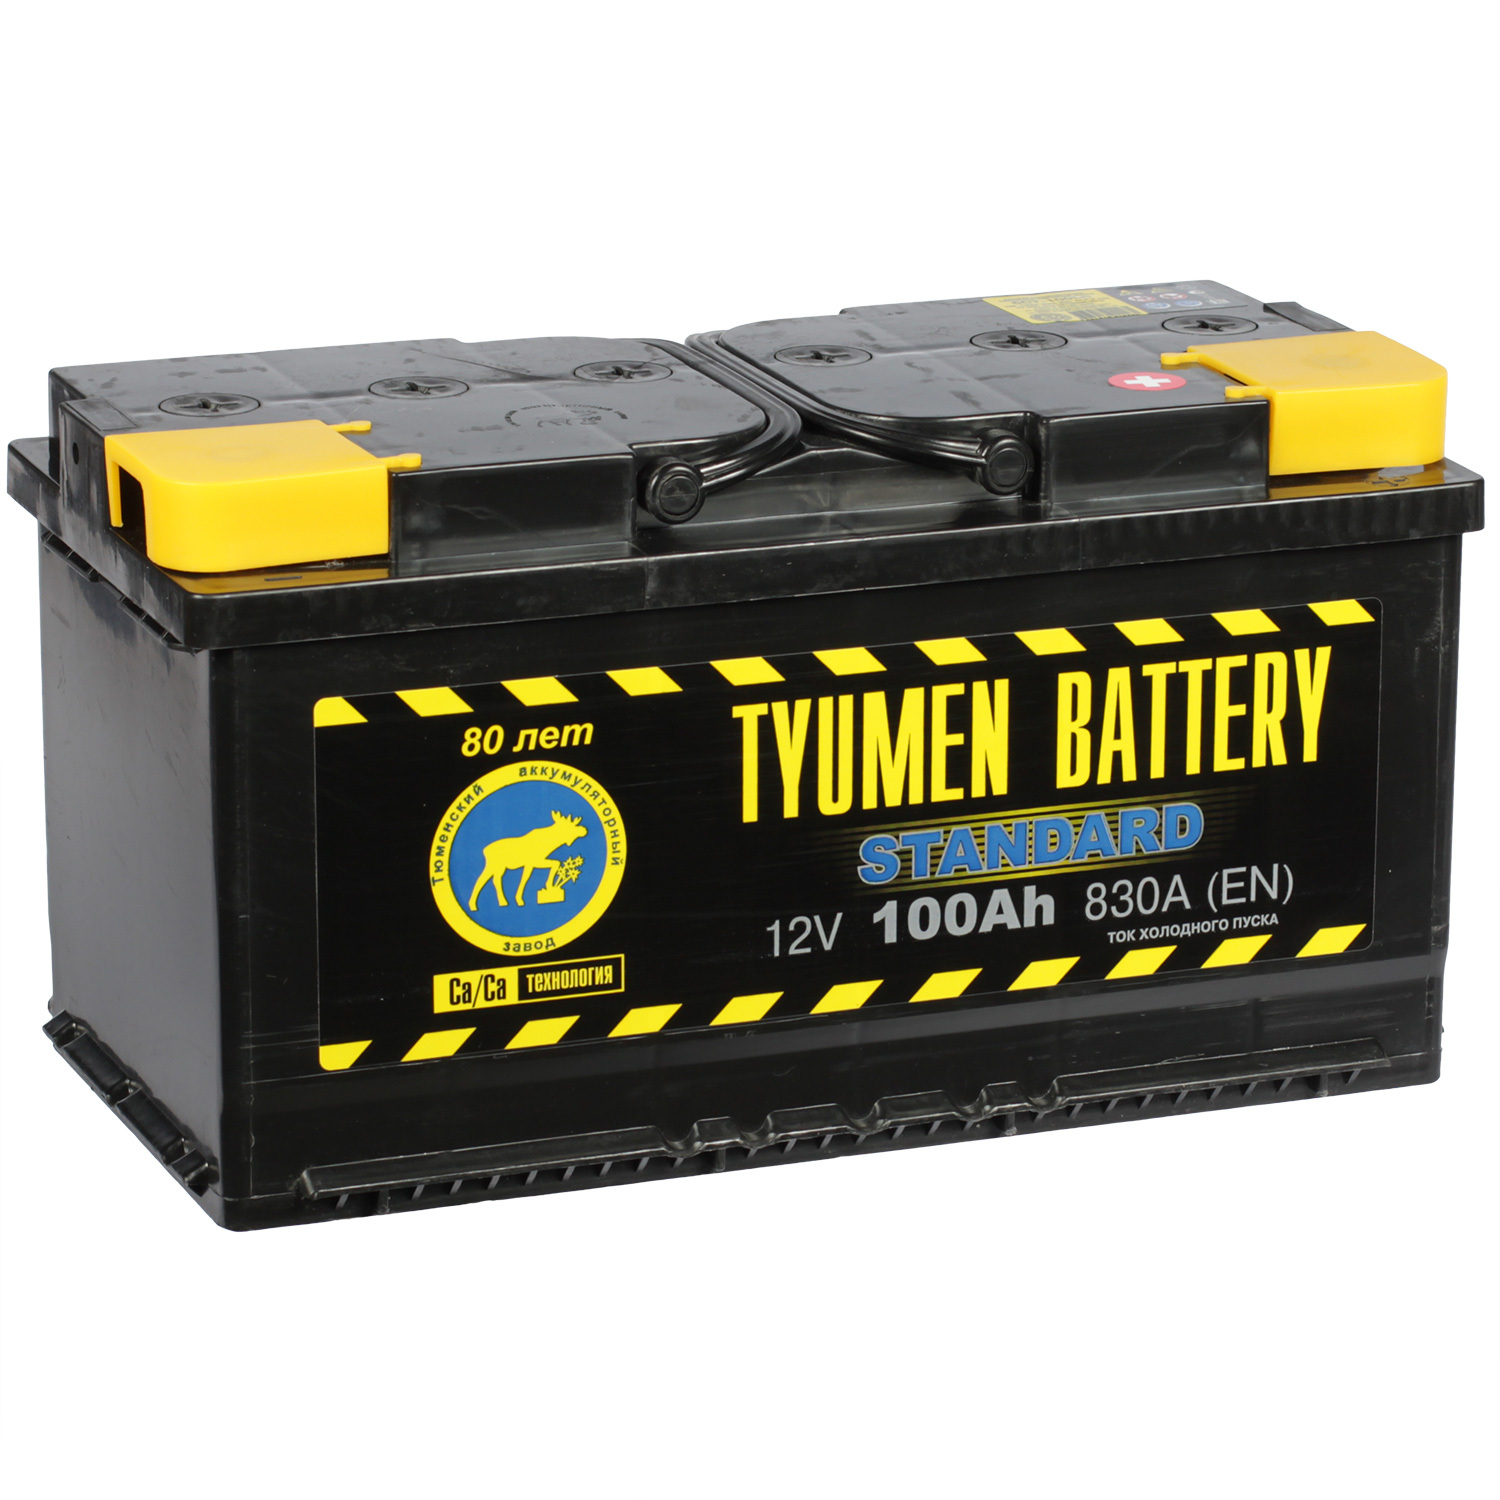 Tyumen Battery Автомобильный аккумулятор Tyumen Battery Standard 100 Ач обратная полярность L5 tyumen battery автомобильный аккумулятор tyumen battery 65 ач обратная полярность d23l